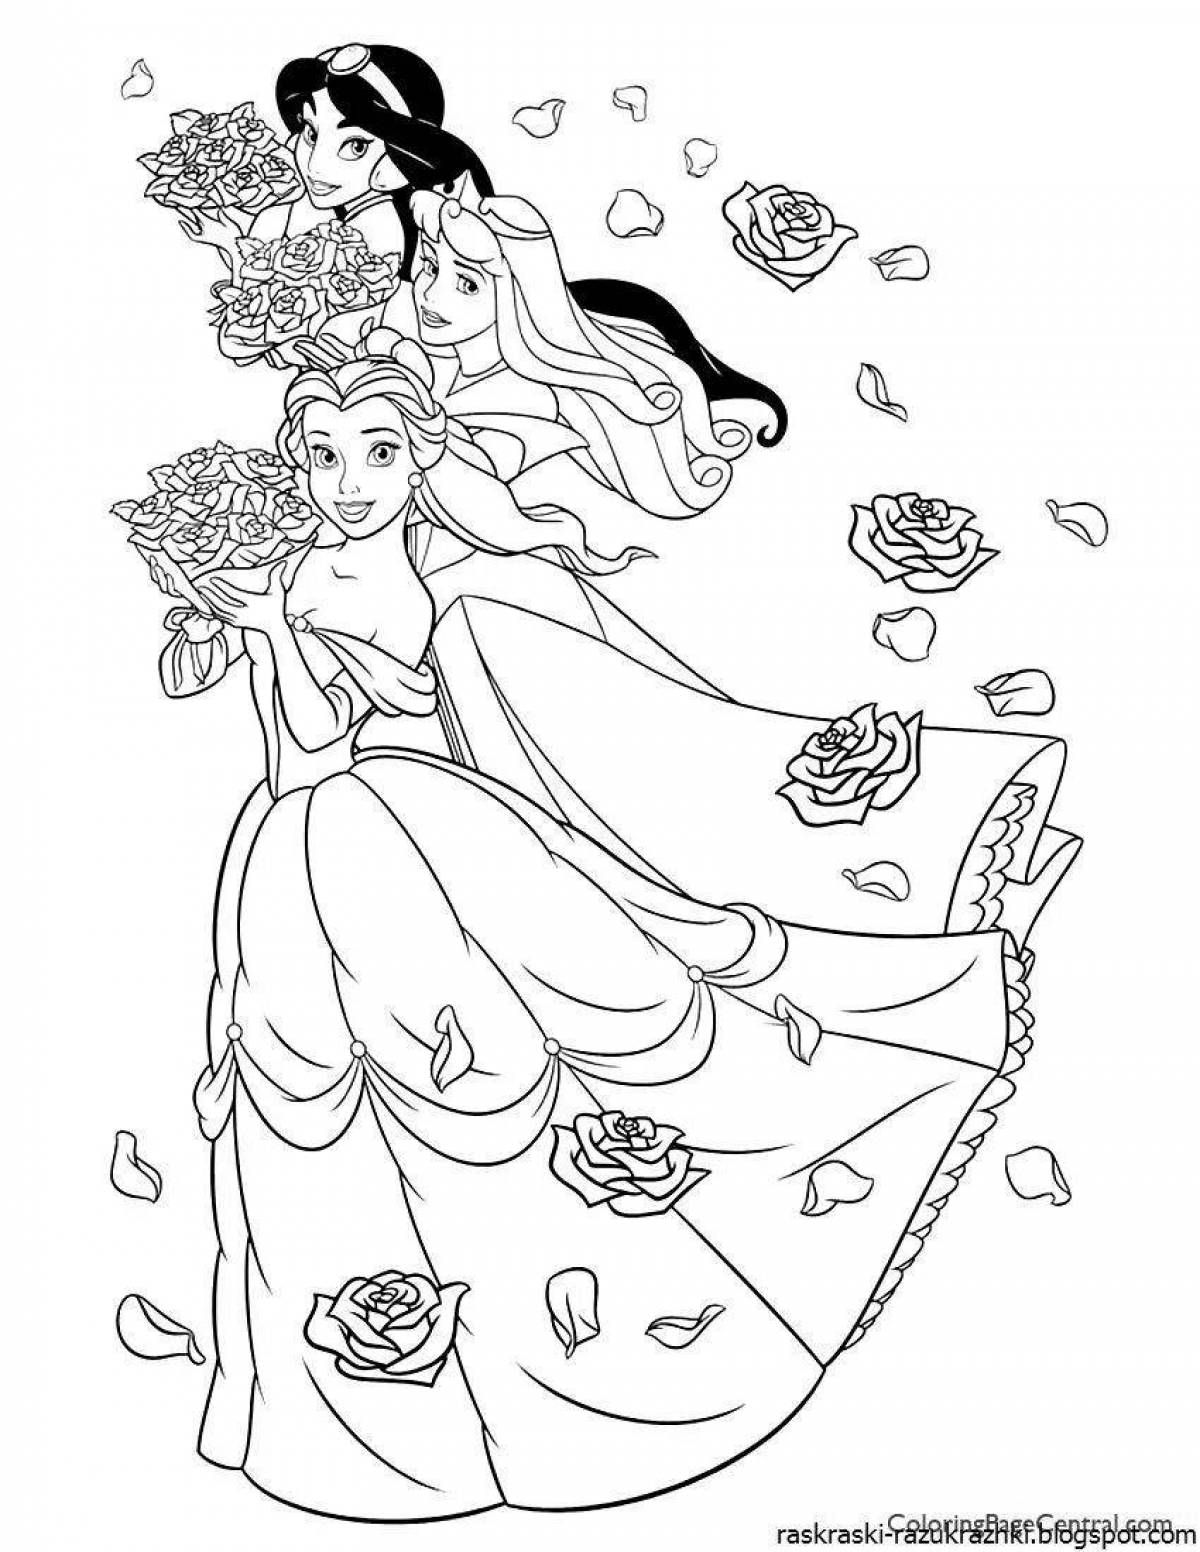 Royal coloring of all disney princesses